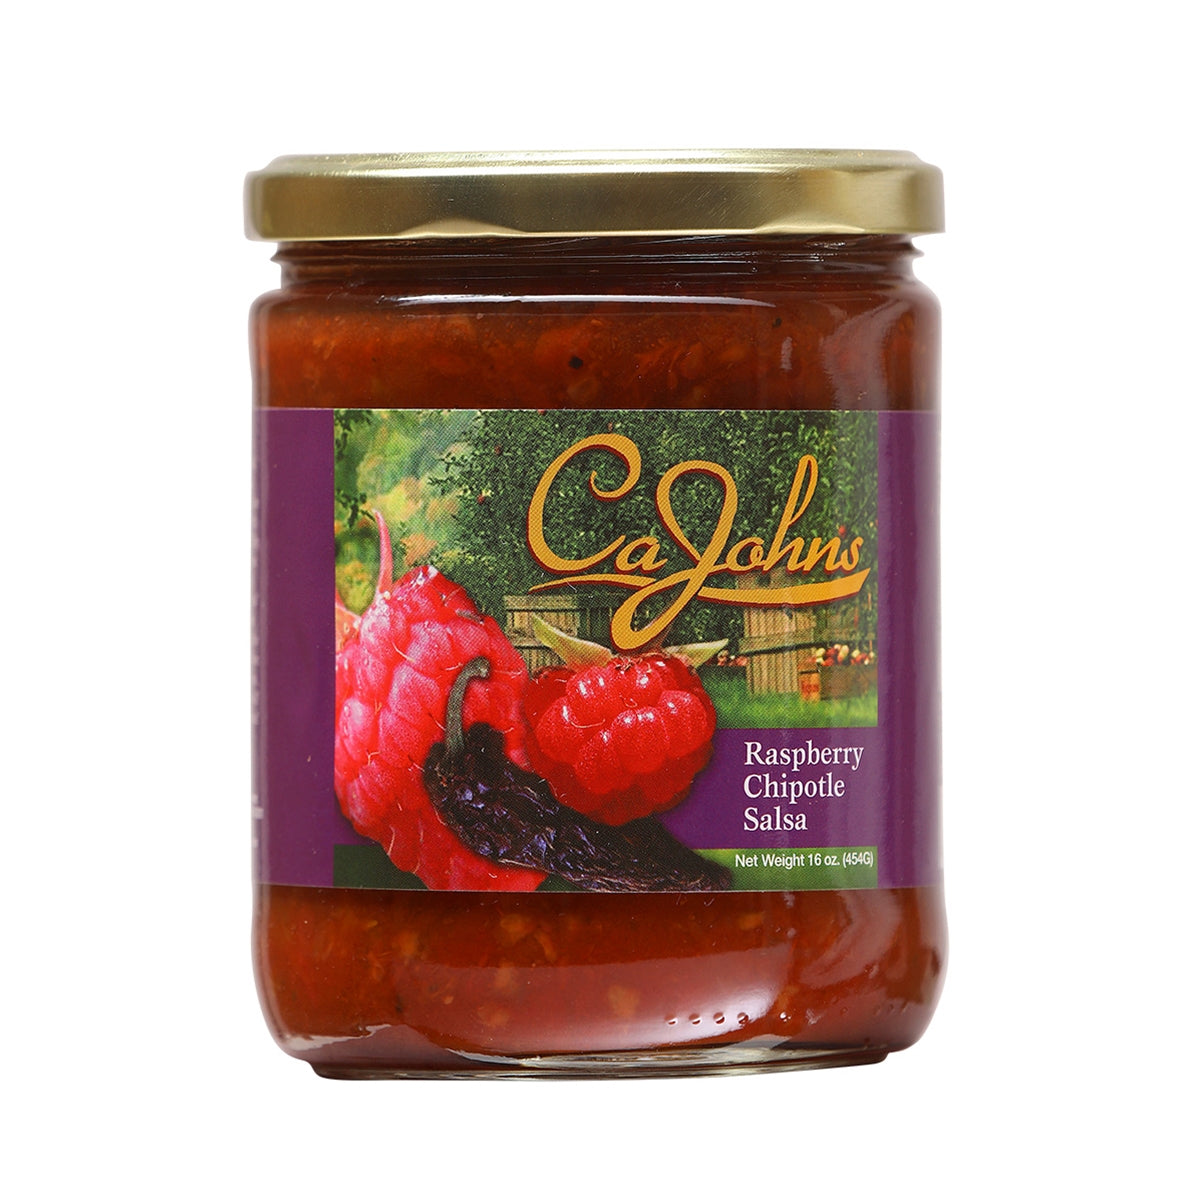 Cajohn's Gourmet Raspberry Chipotle Salsa